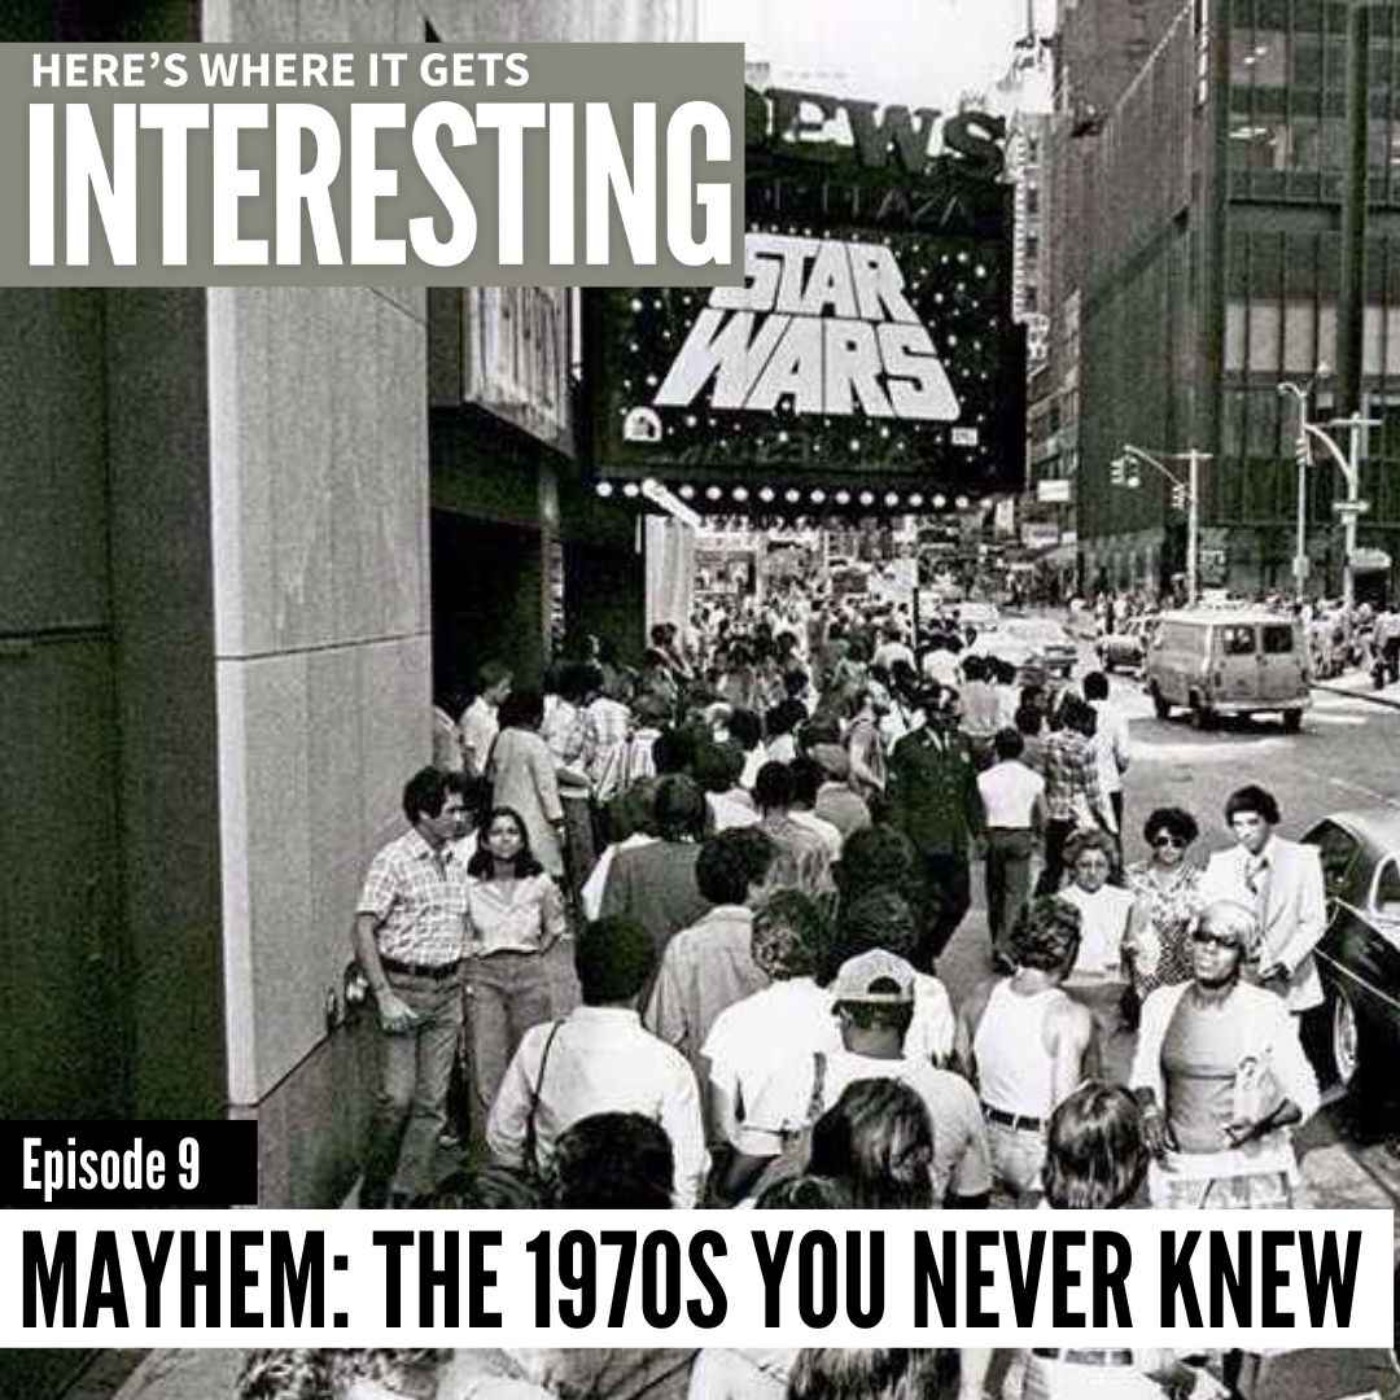 Mayhem: The 1970s You Never Knew, Episode 9